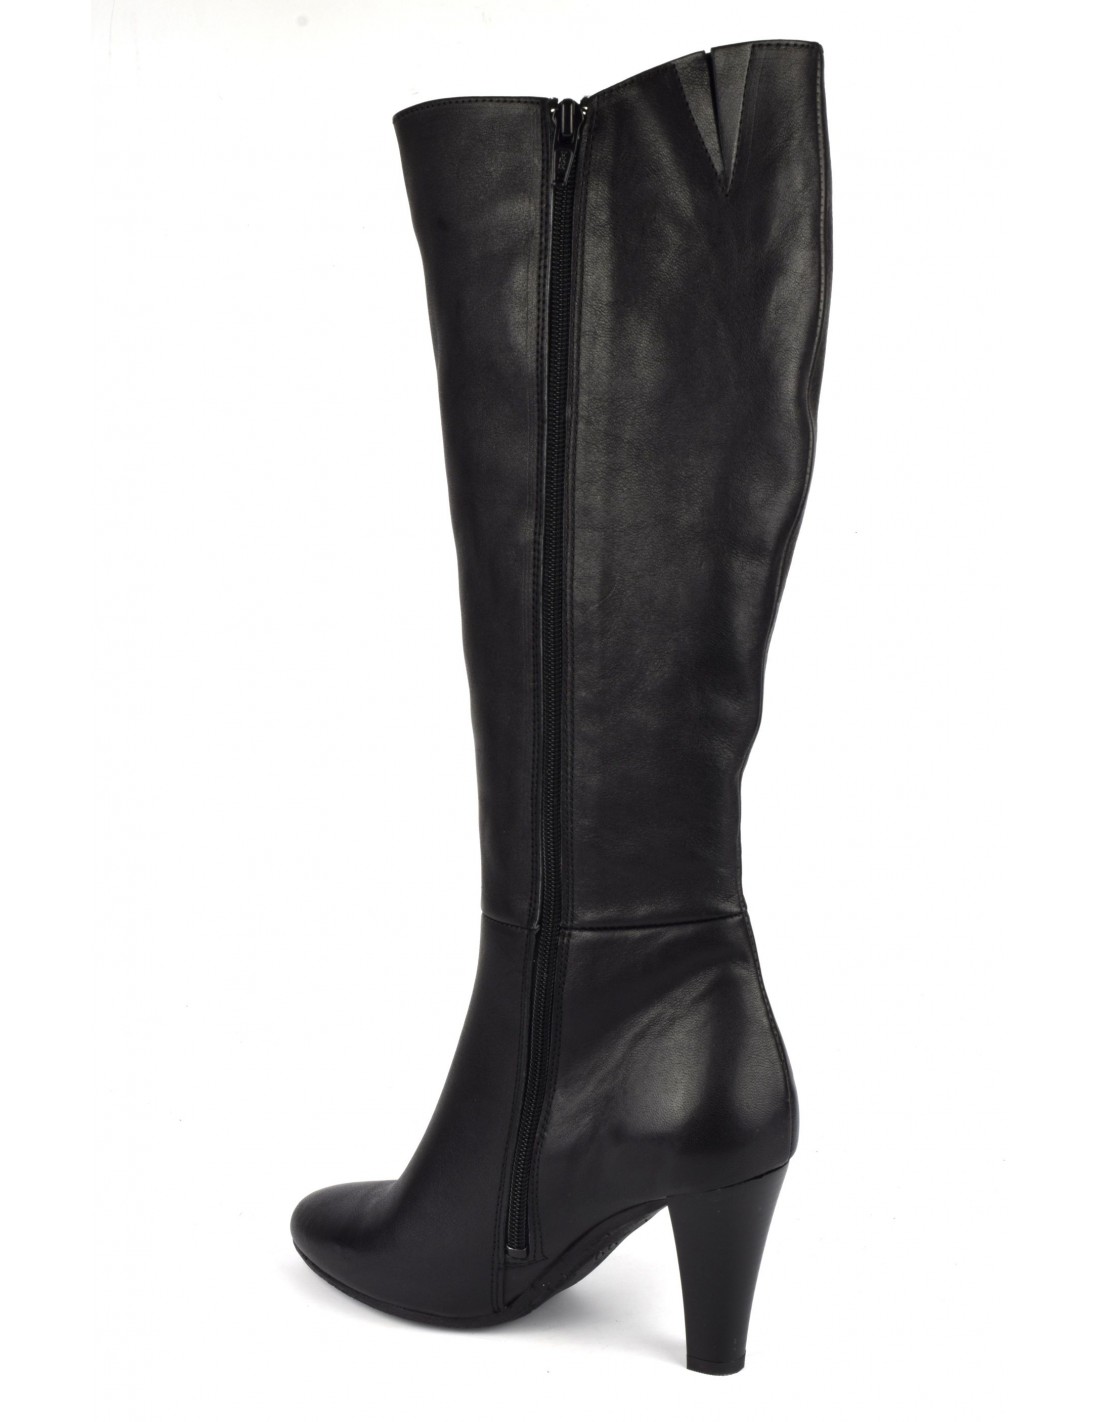 Boots, smooth leather, black, Valk, Bella B